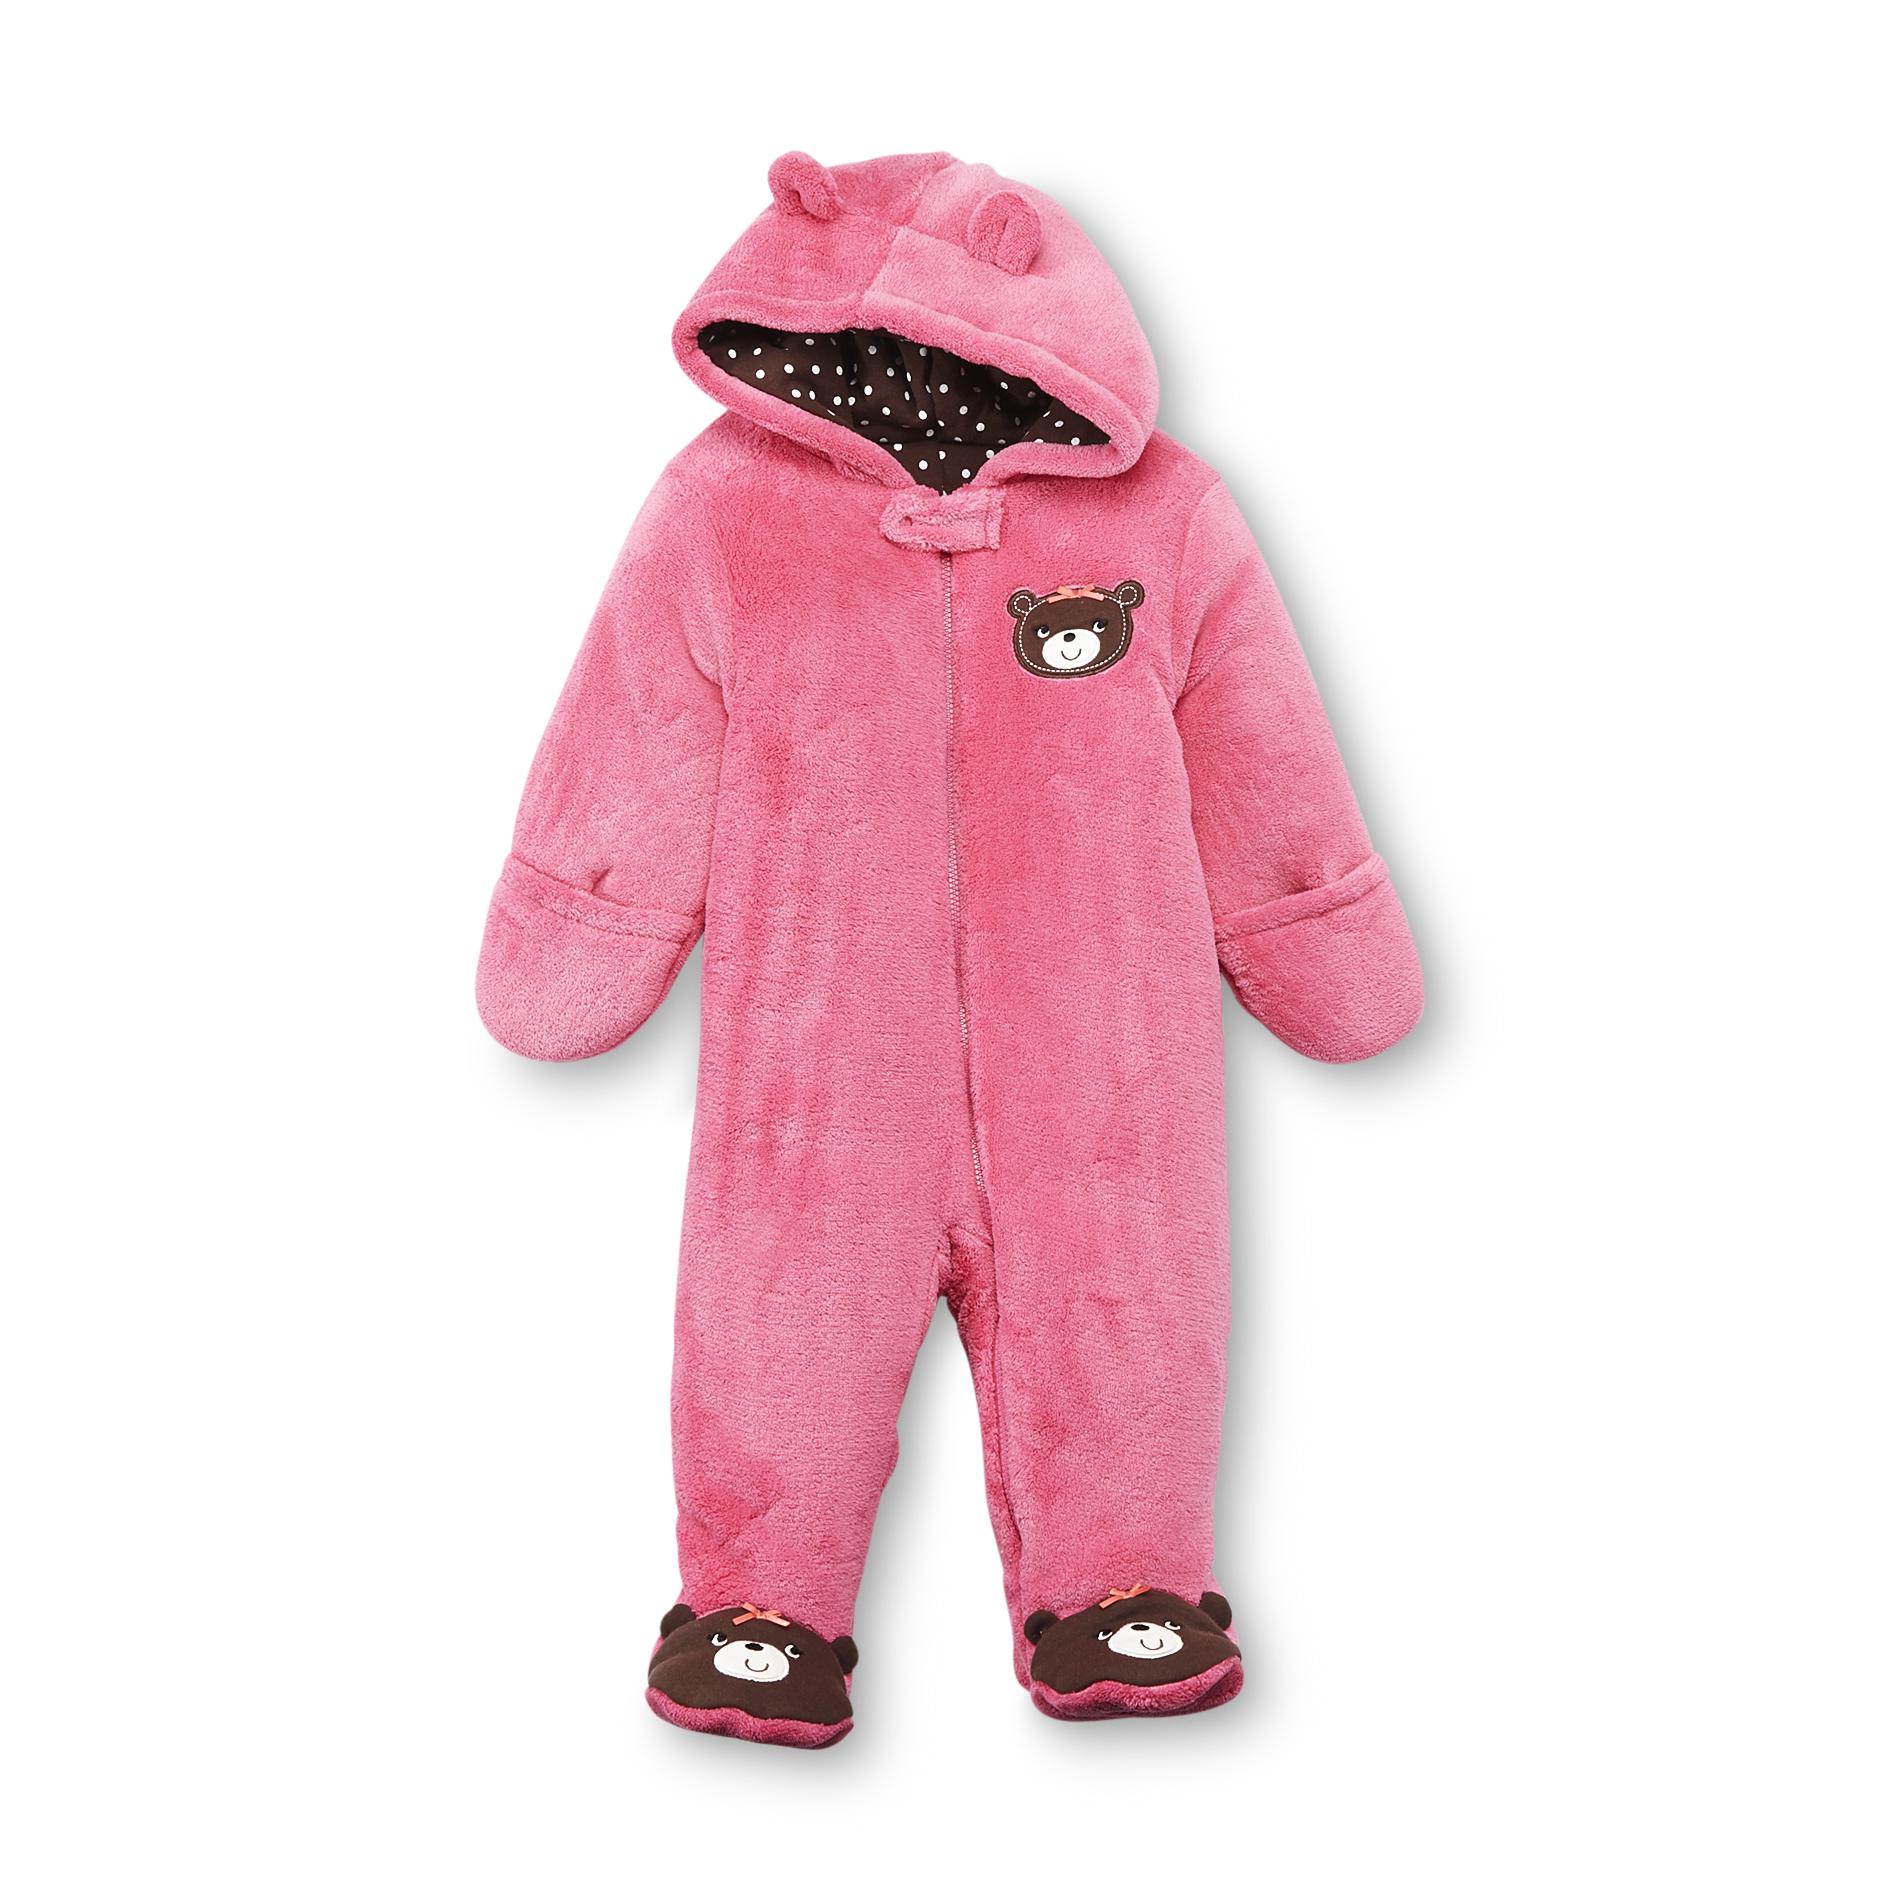 Small Wonders Newborn & Infant Girl's Fleece Sleeper Costume - Bear